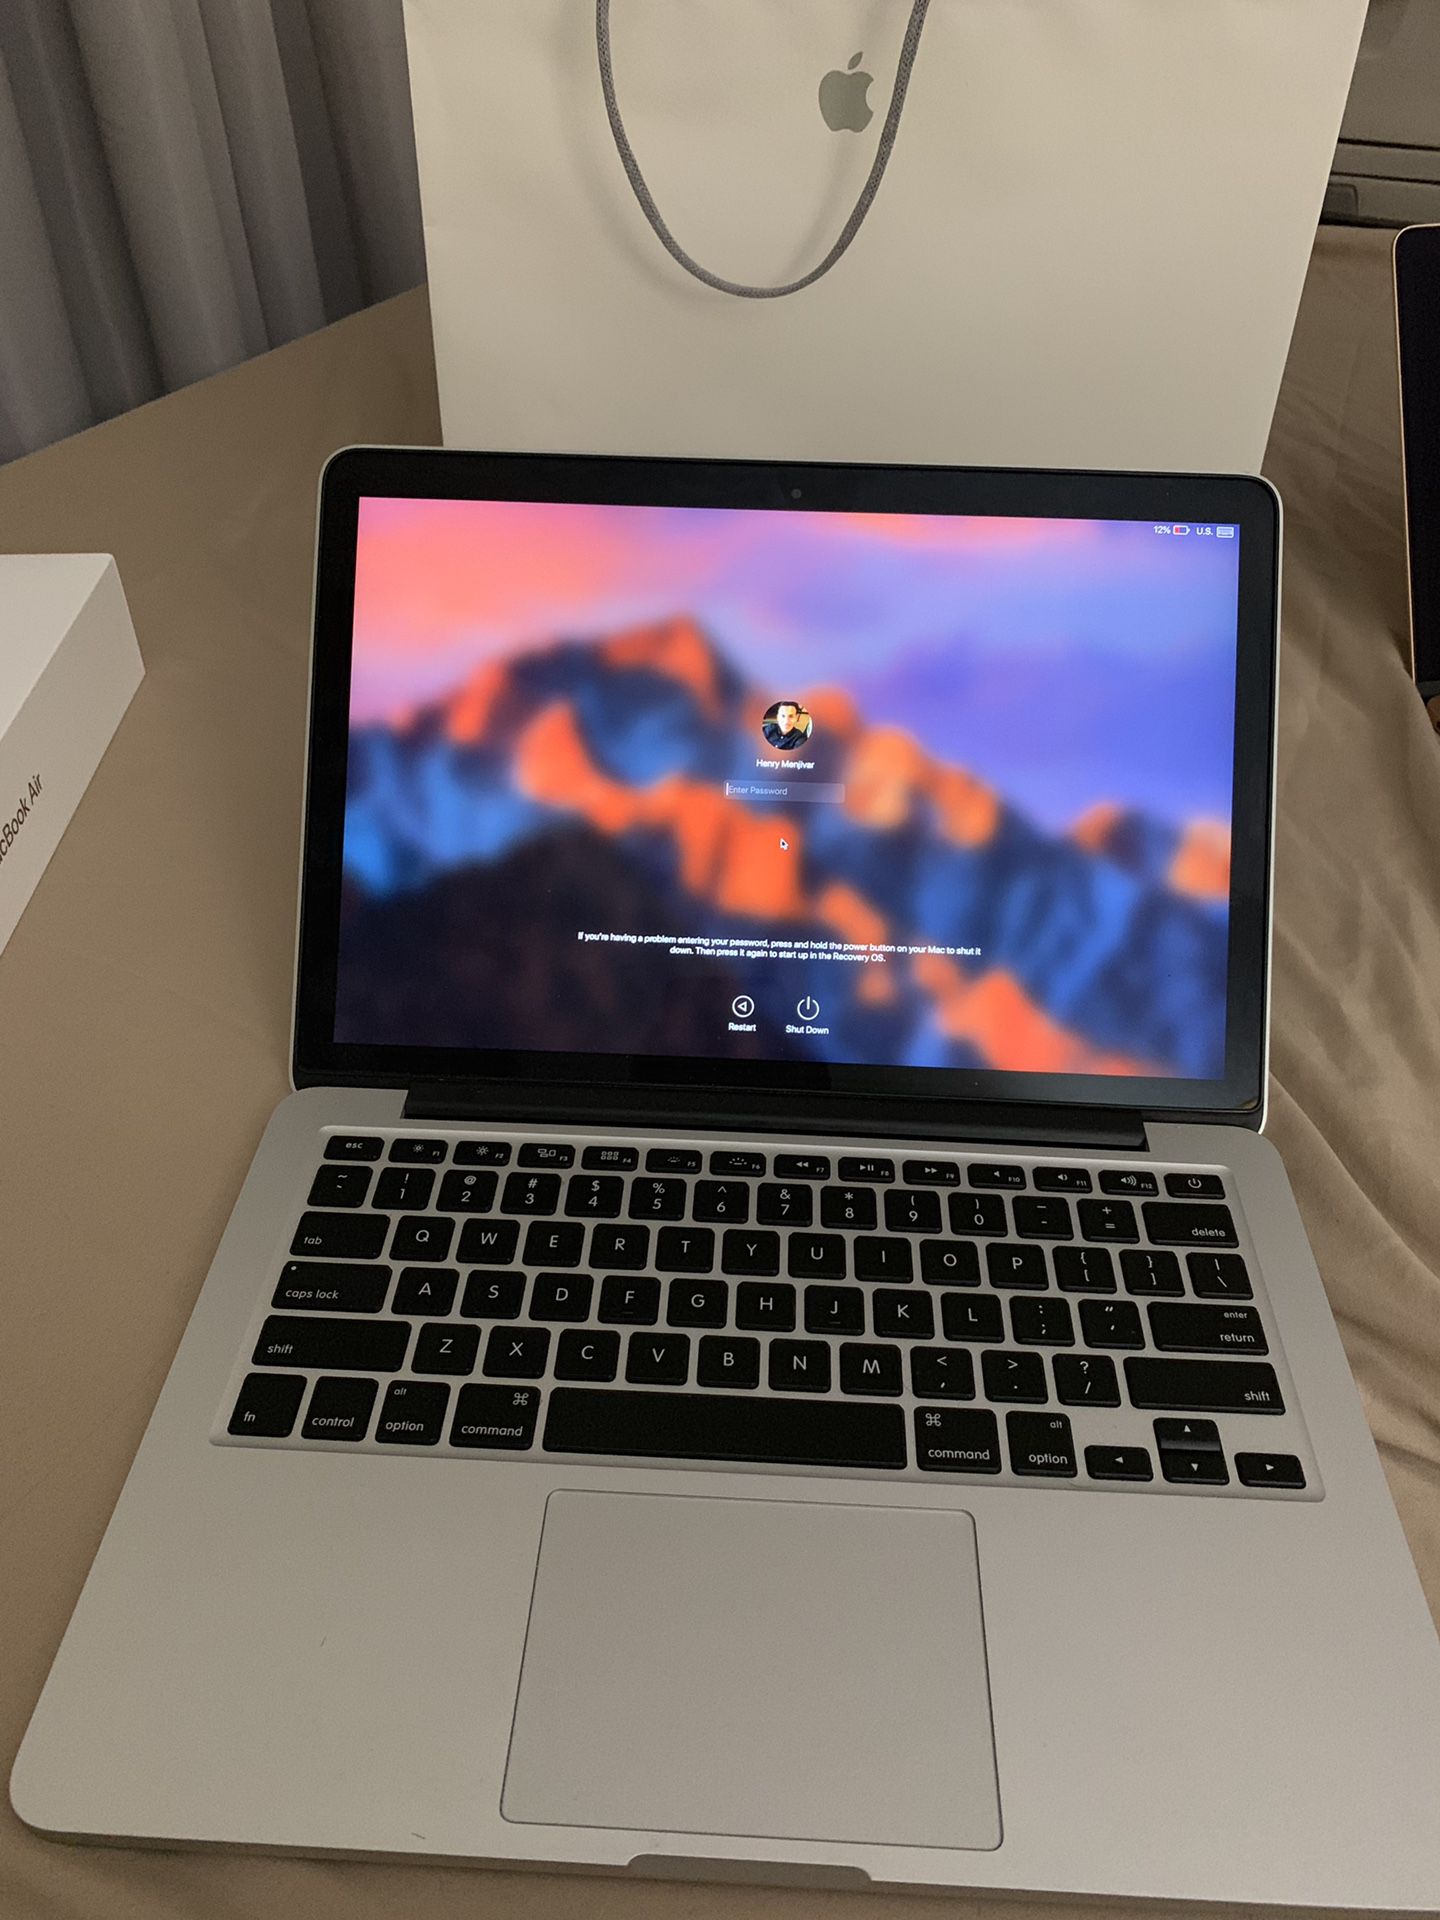 MacBook Pro 13 inch (128GB Early 2015)